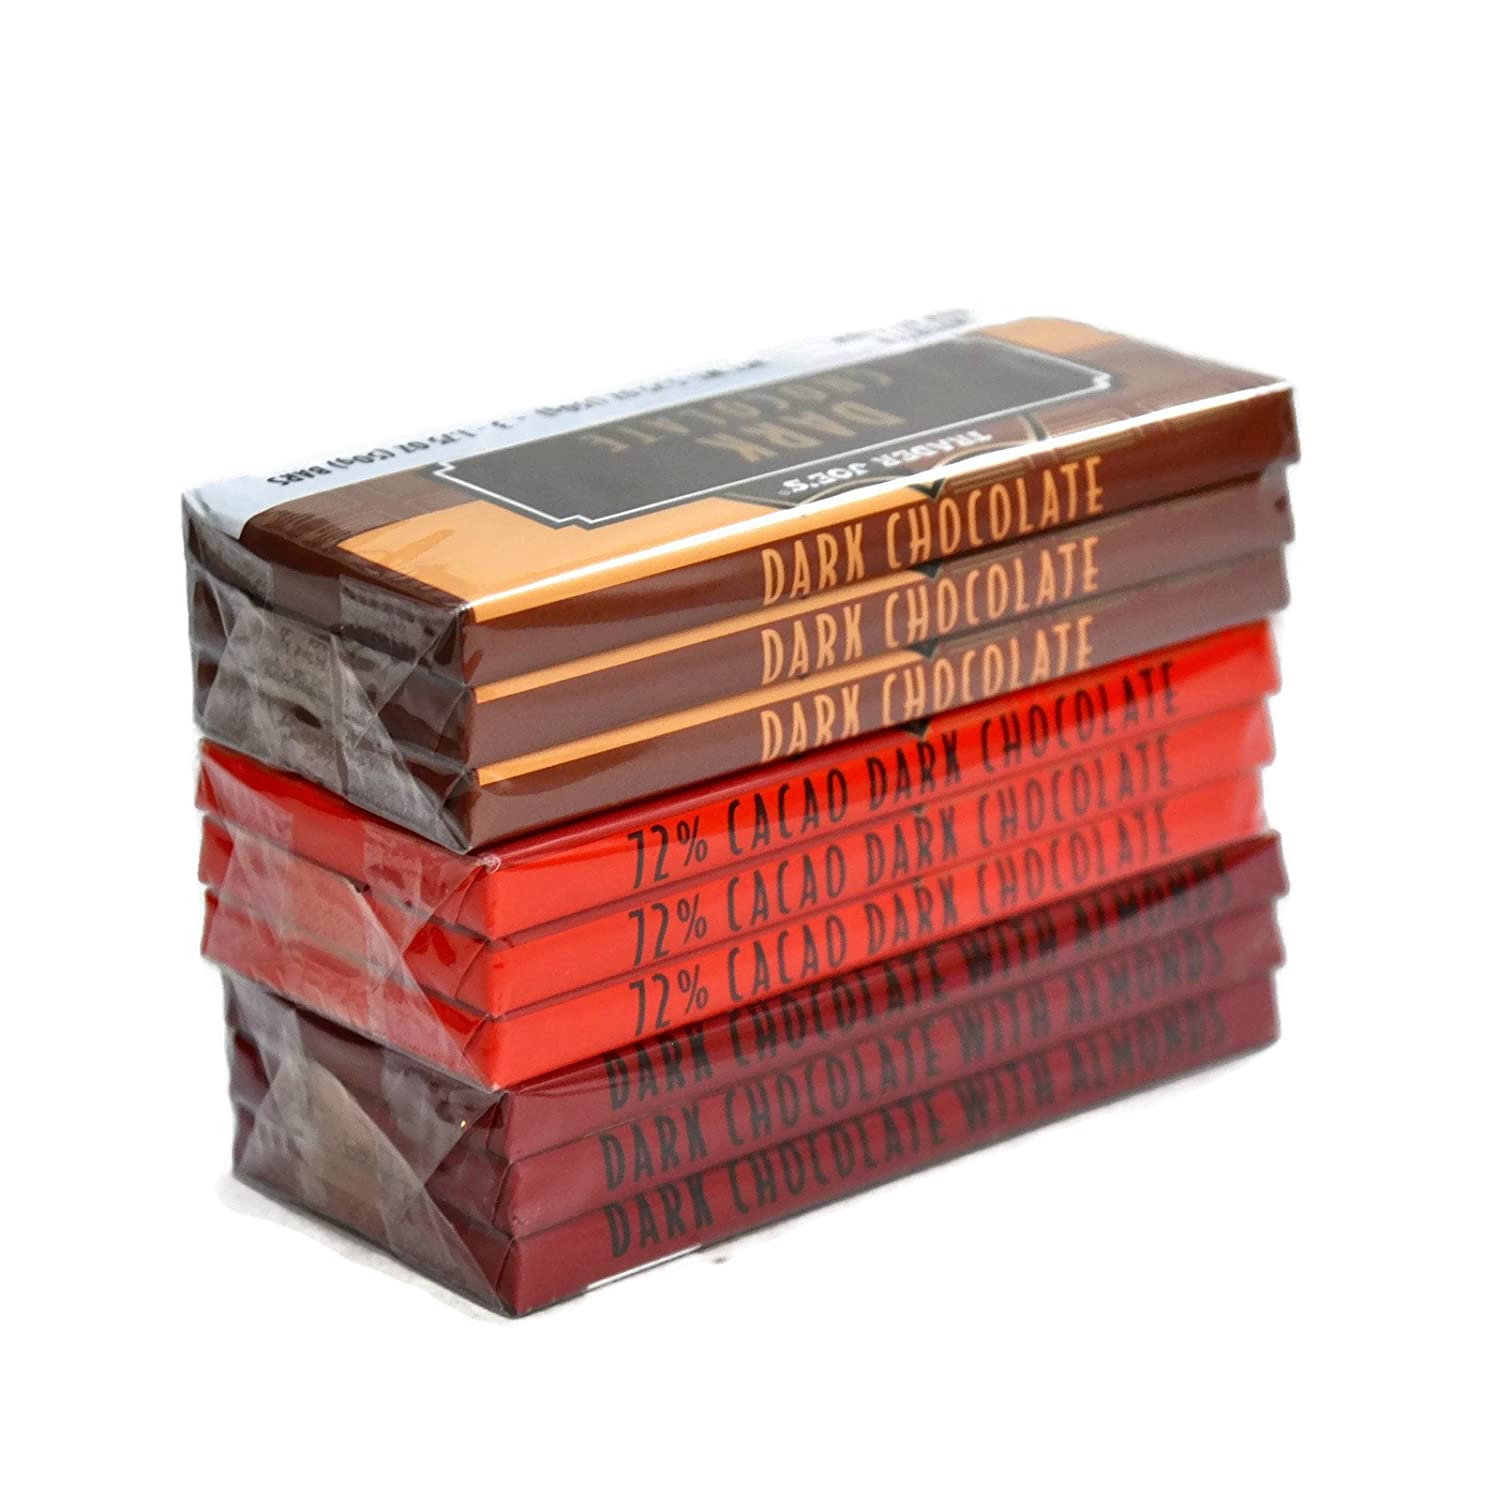 Trader Joe’s Variety Pack Belgian Dark Chocolate Bars, 9-Count